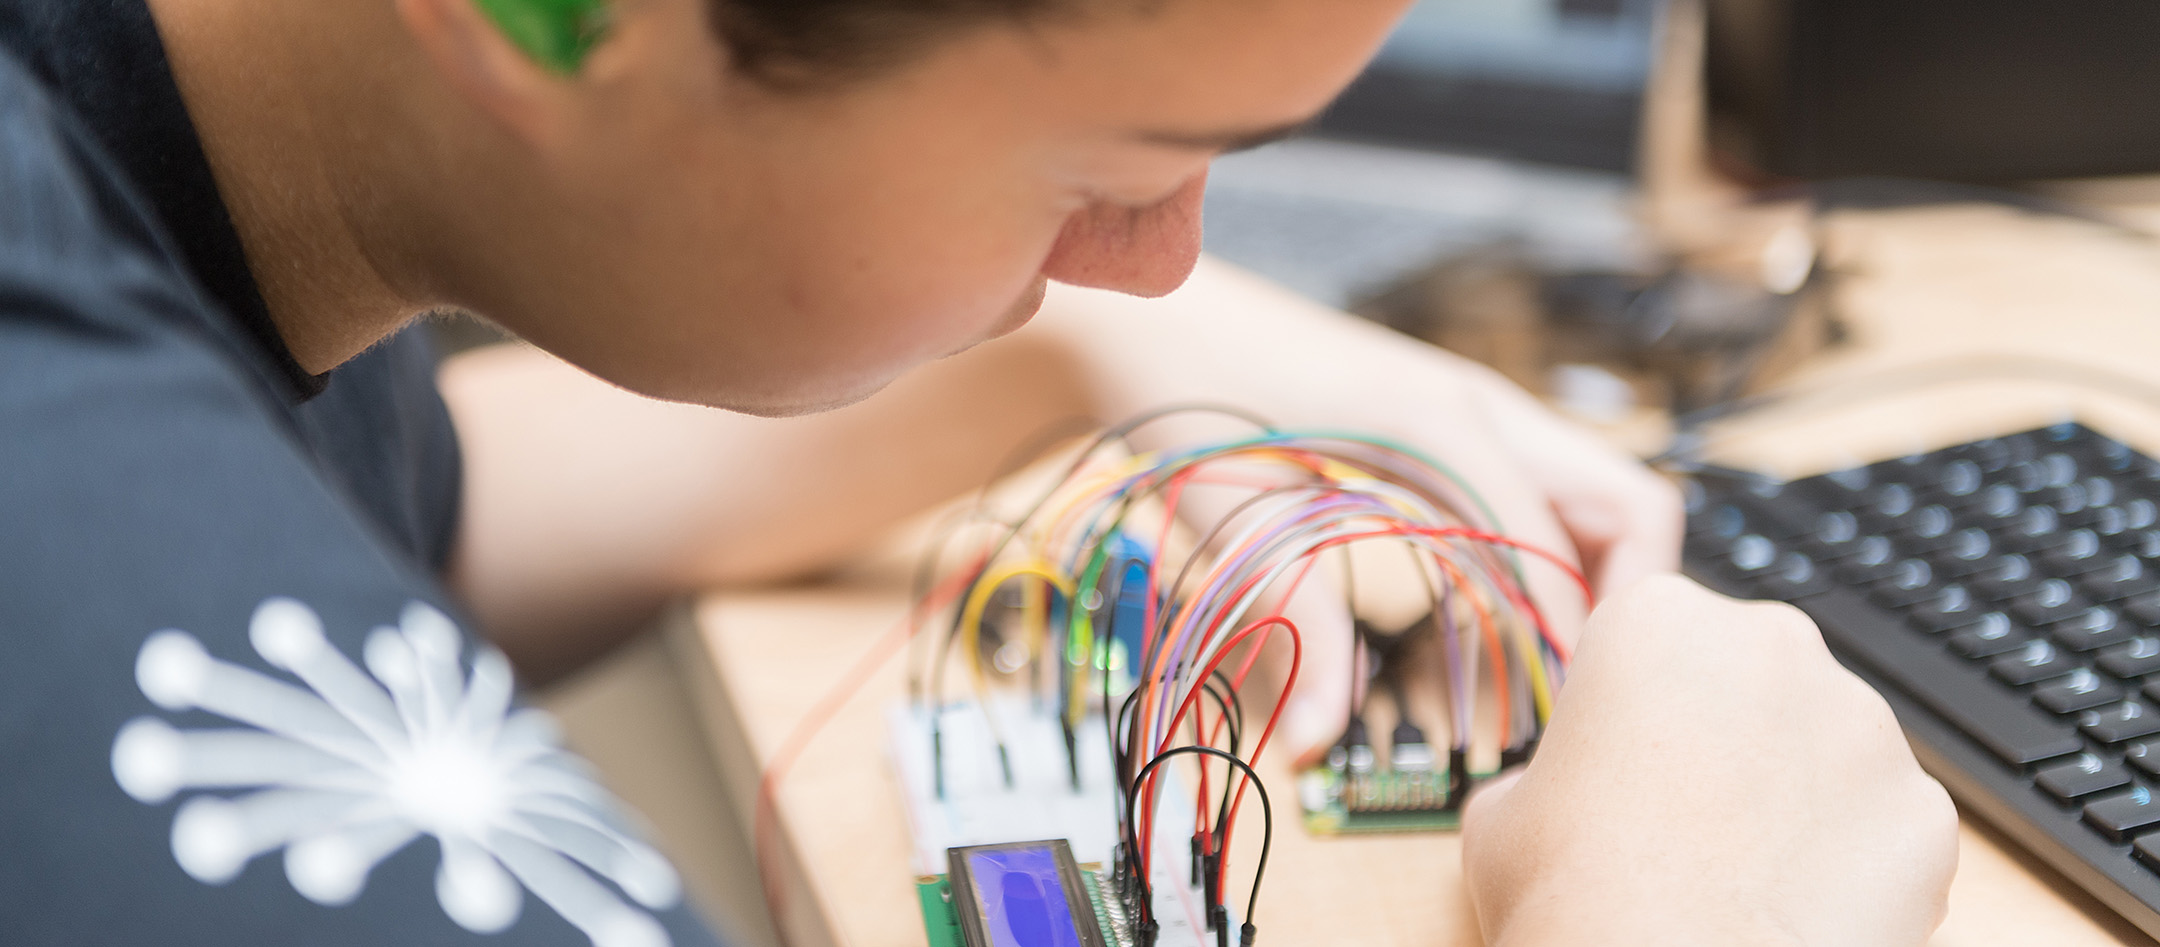 A student assembling a circuit board